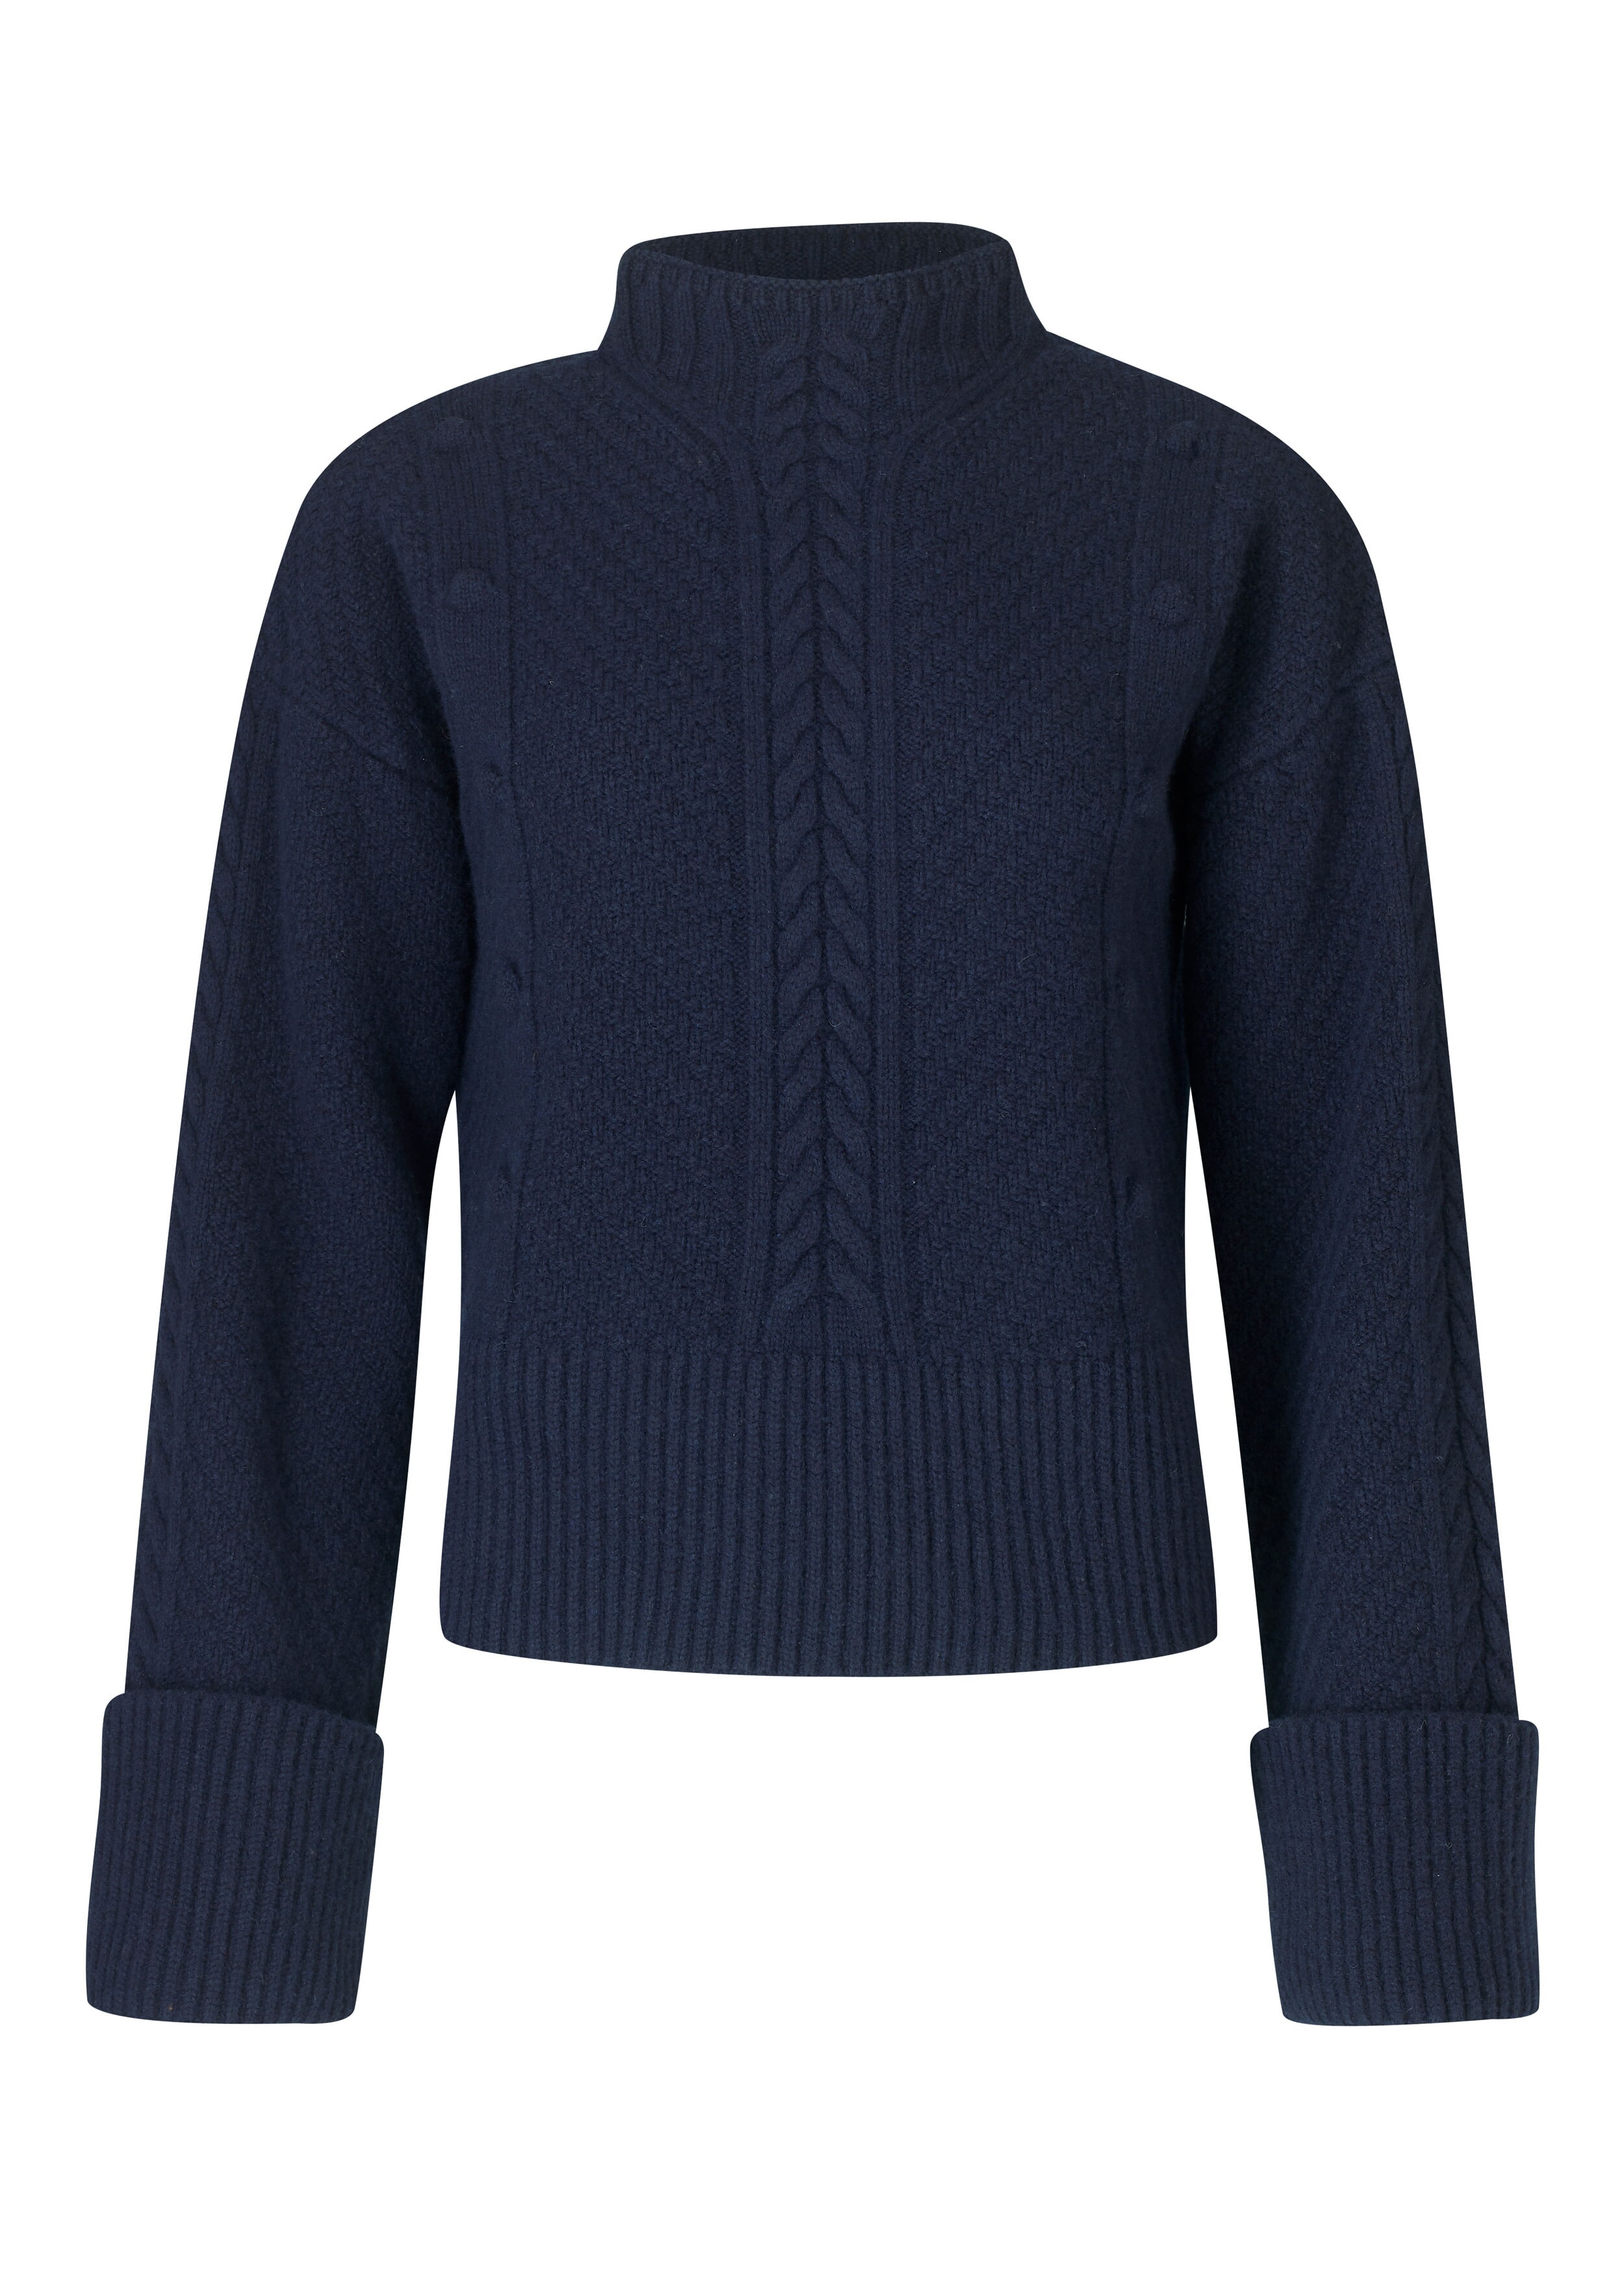 Merino Cashmere Chevron Cable Knit Sweater Navy